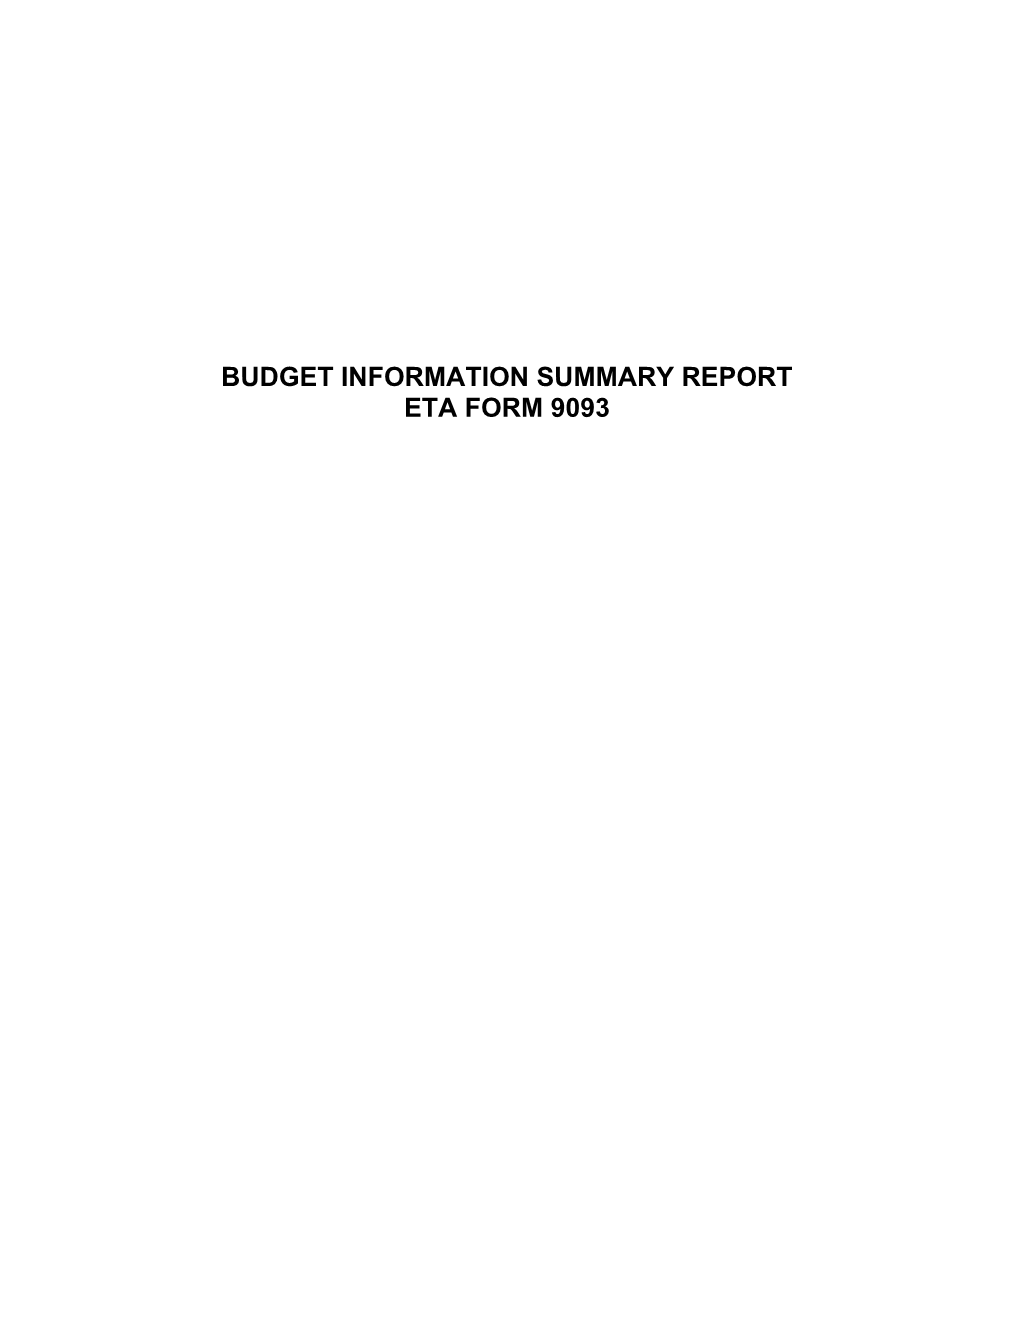 WIA Budget Information Summary